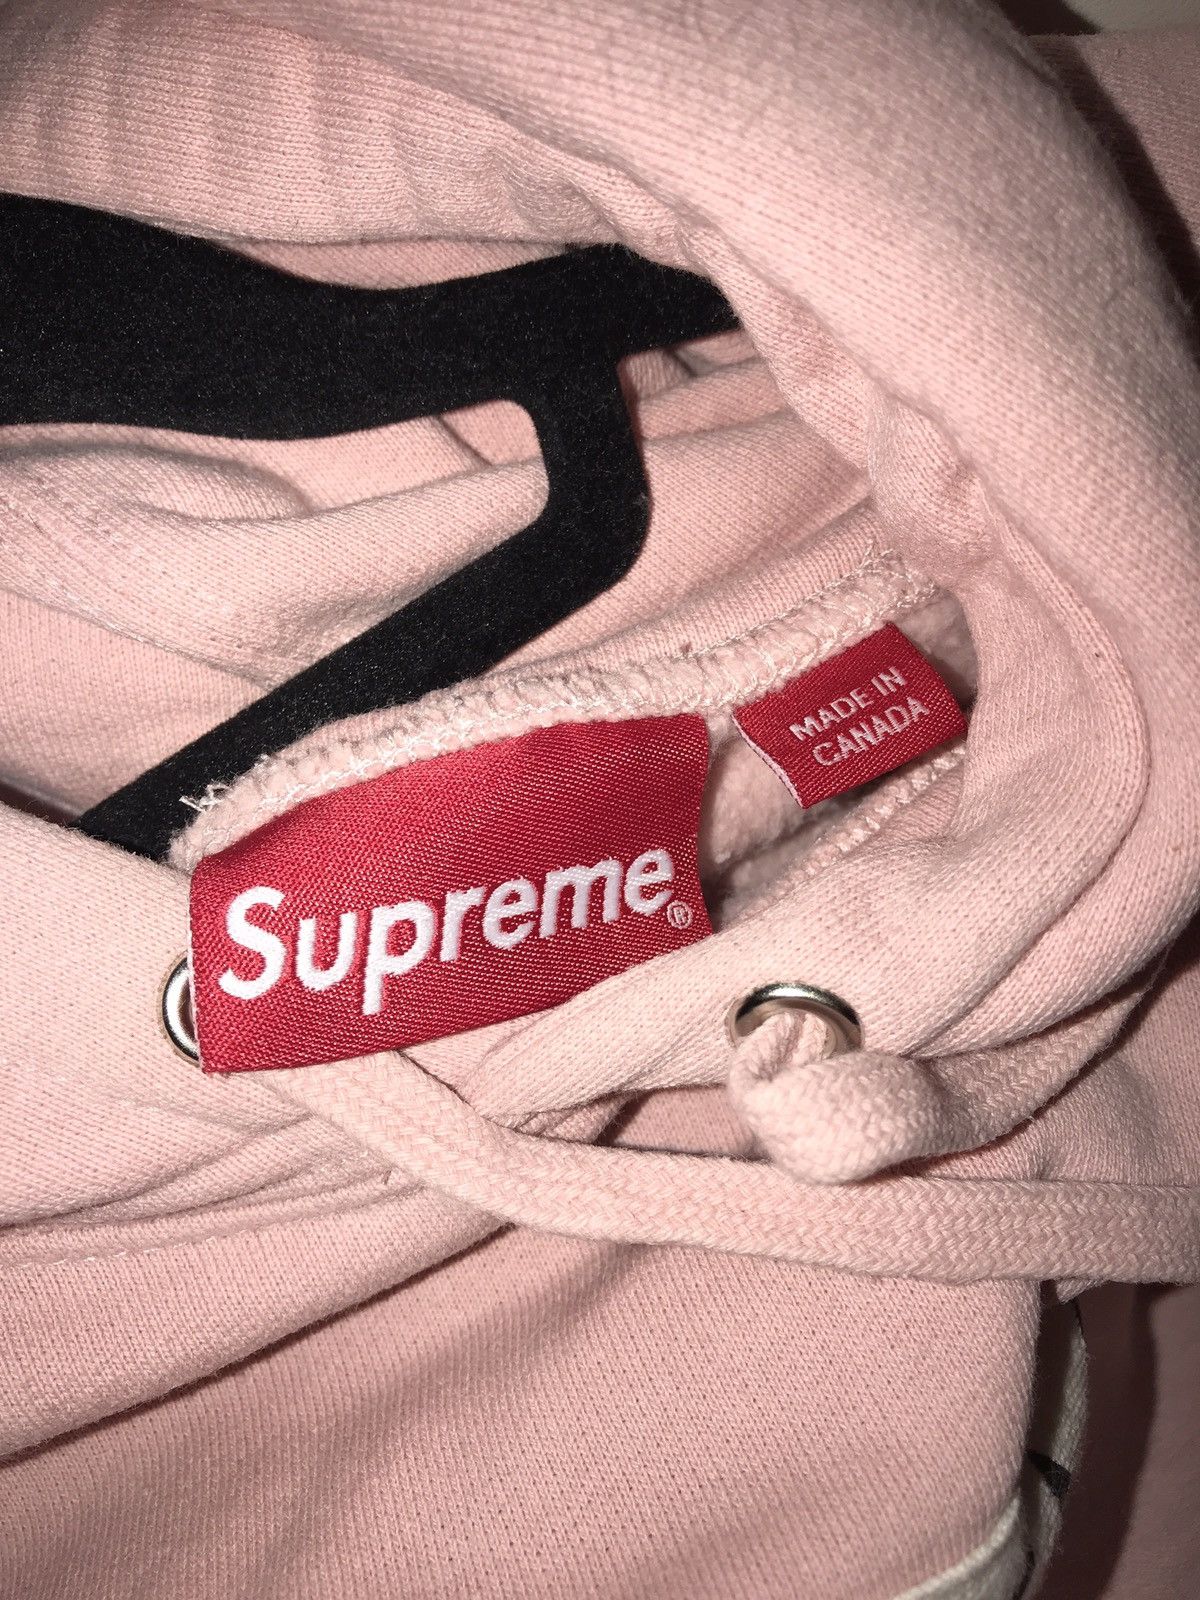 Supreme *LAST DROP* pink supreme hoodie Size US M / EU 48-50 / 2 - 4 Preview